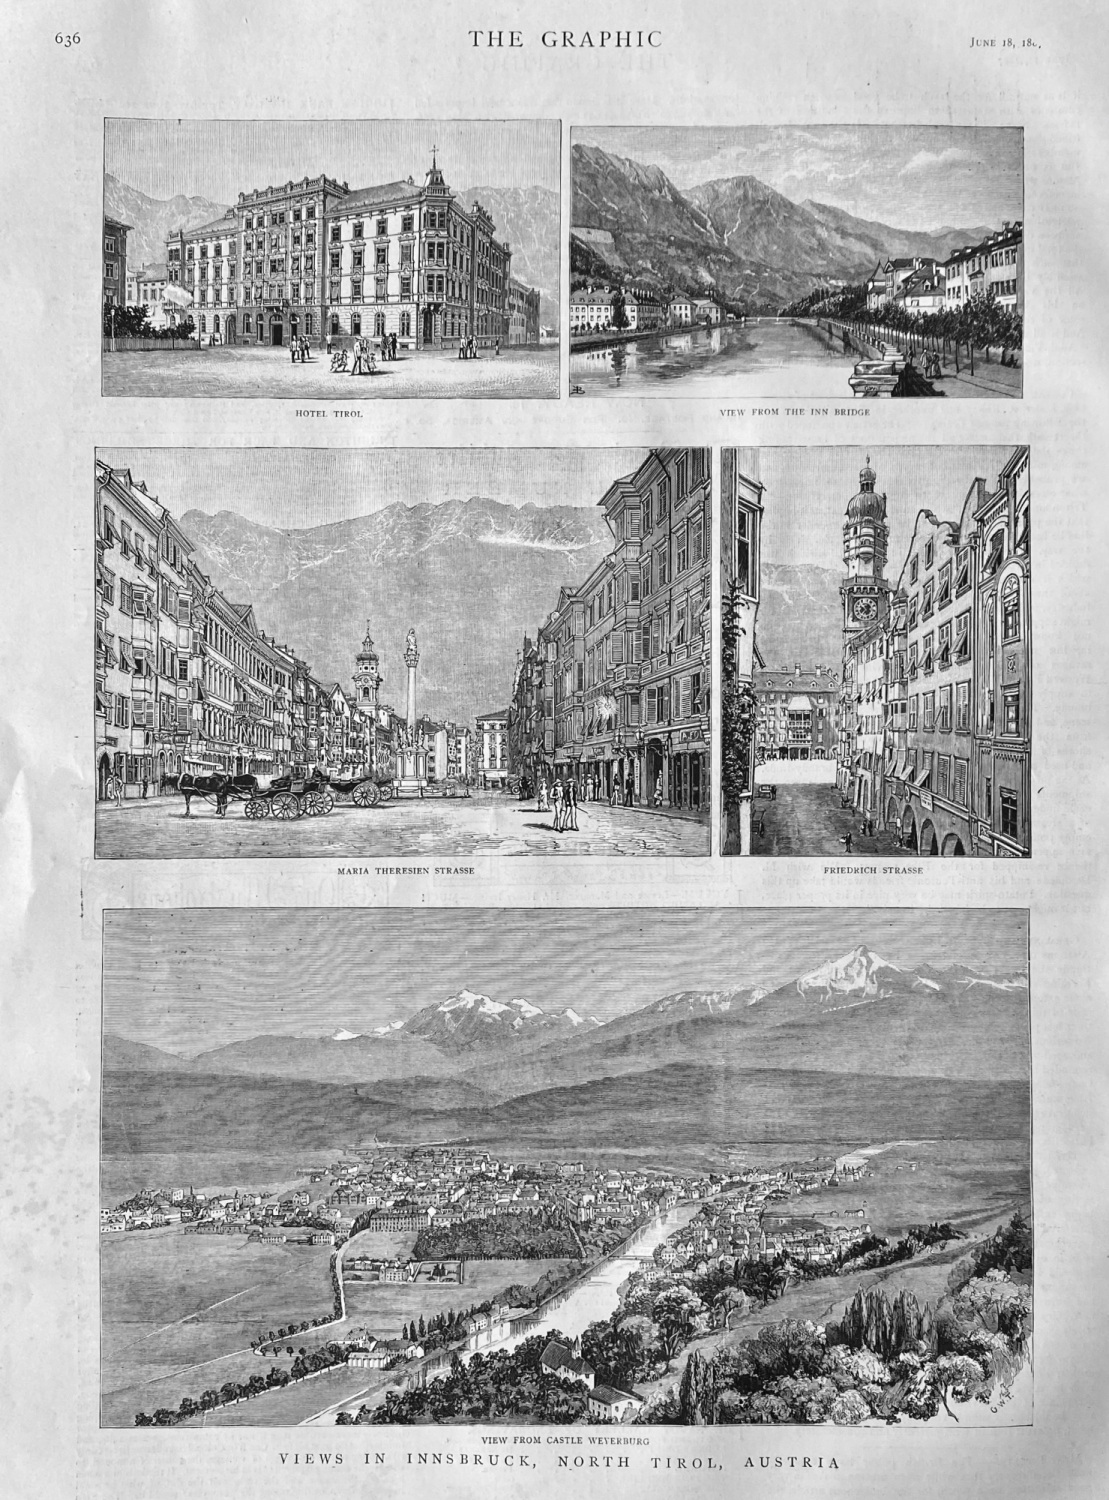 Views in Innsbruck, North Tirol, Austria.  1887.